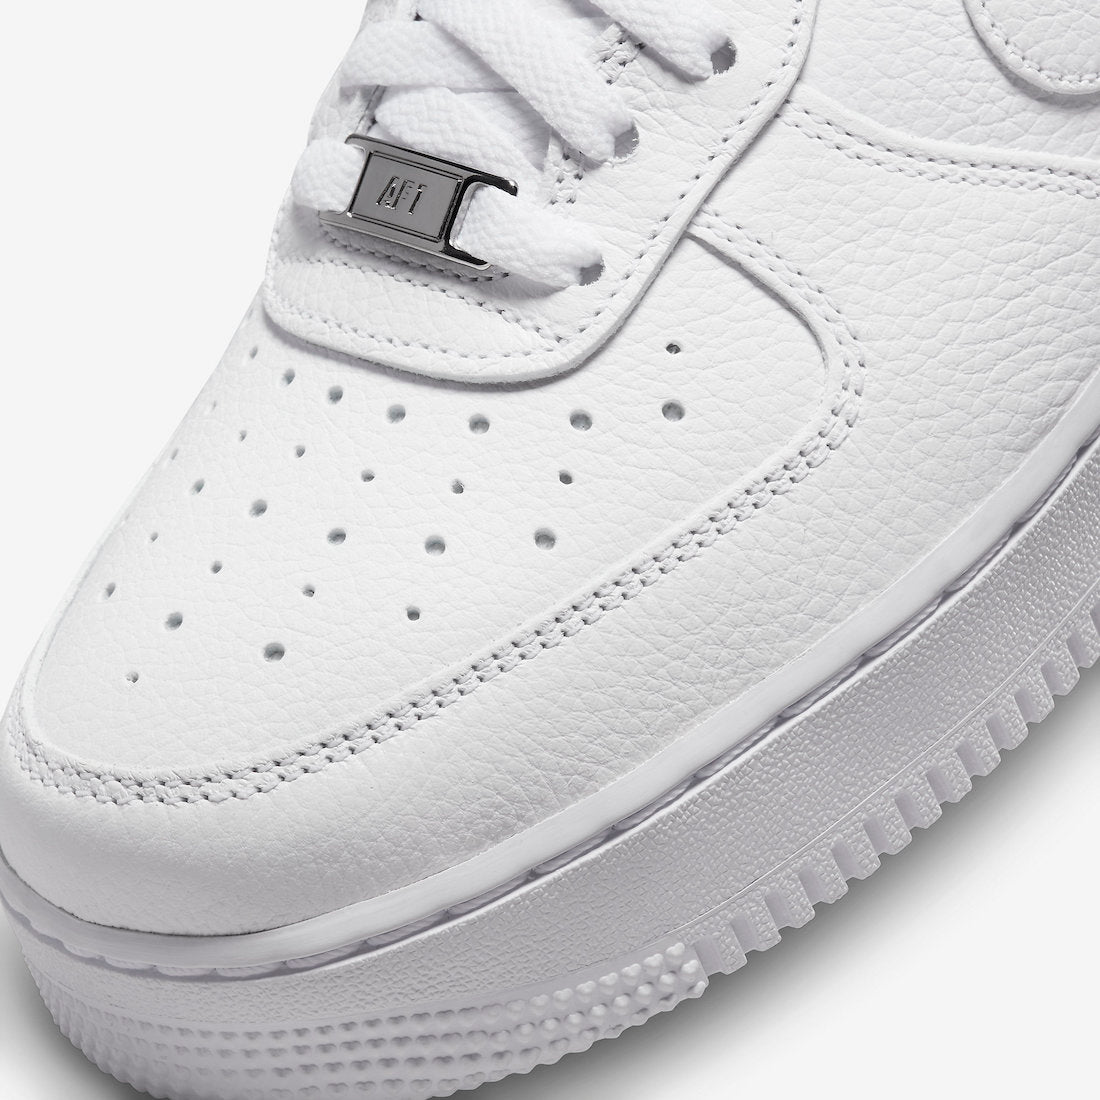 NOCTA x Air Force 1 Low 'Certified Lover Boy' - Aussie Sneaker Plug